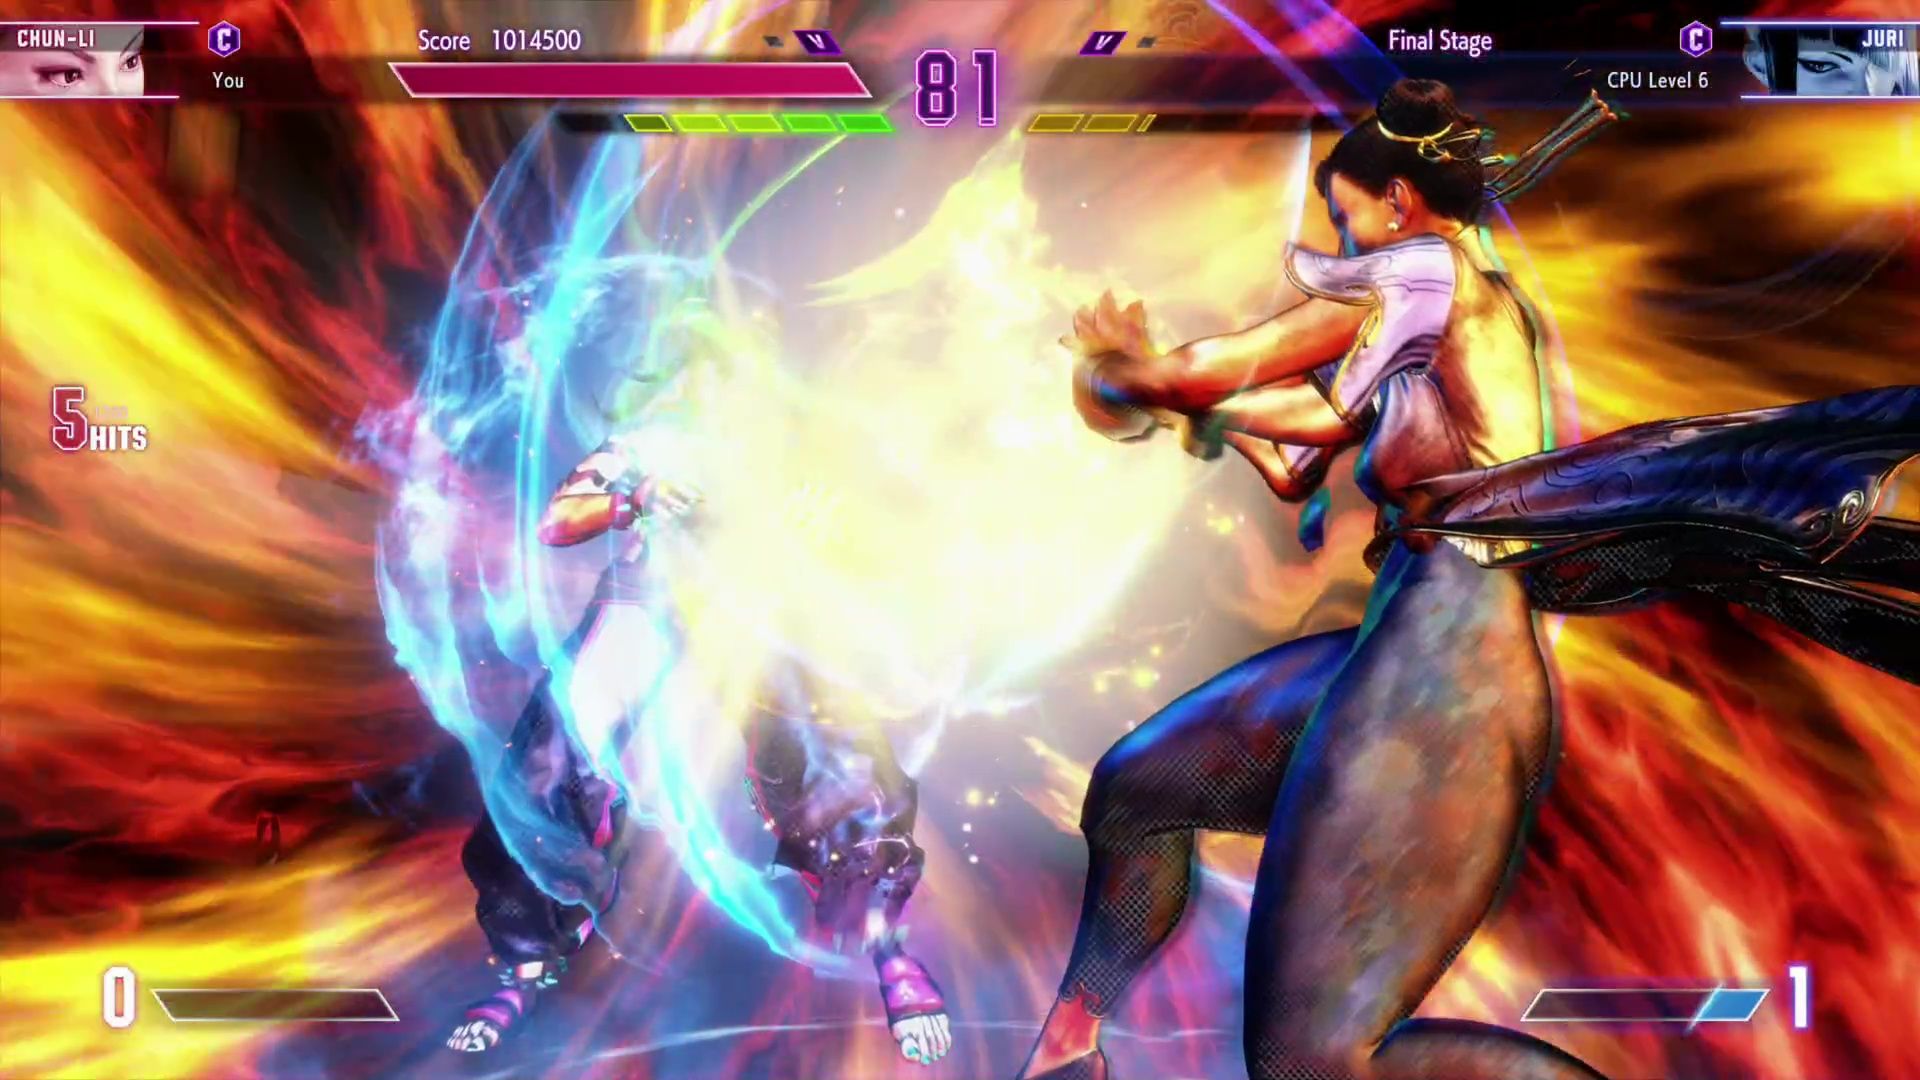 Chun-Li defeats Juri using her Super Finish in Street Fighter 6's Story Mode